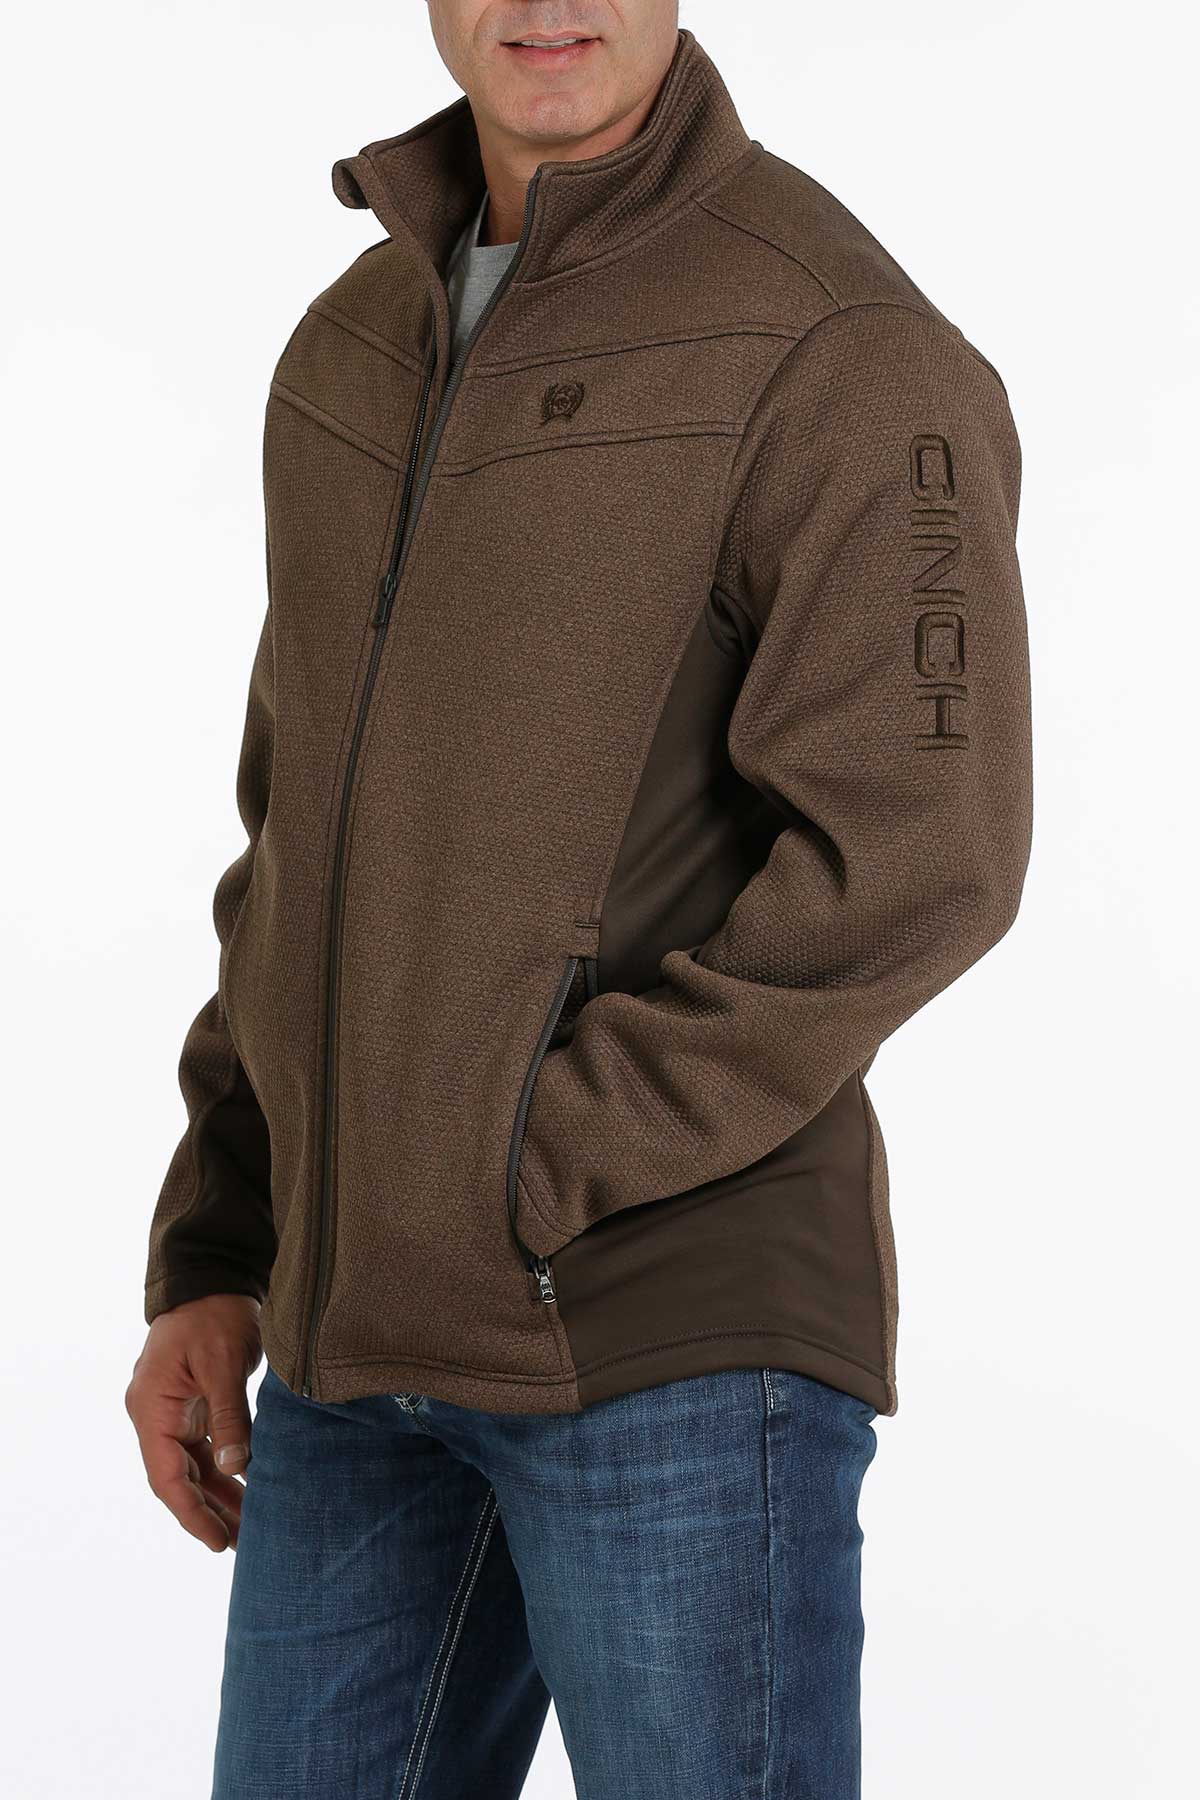 Cinch Brown Sweater Jacket